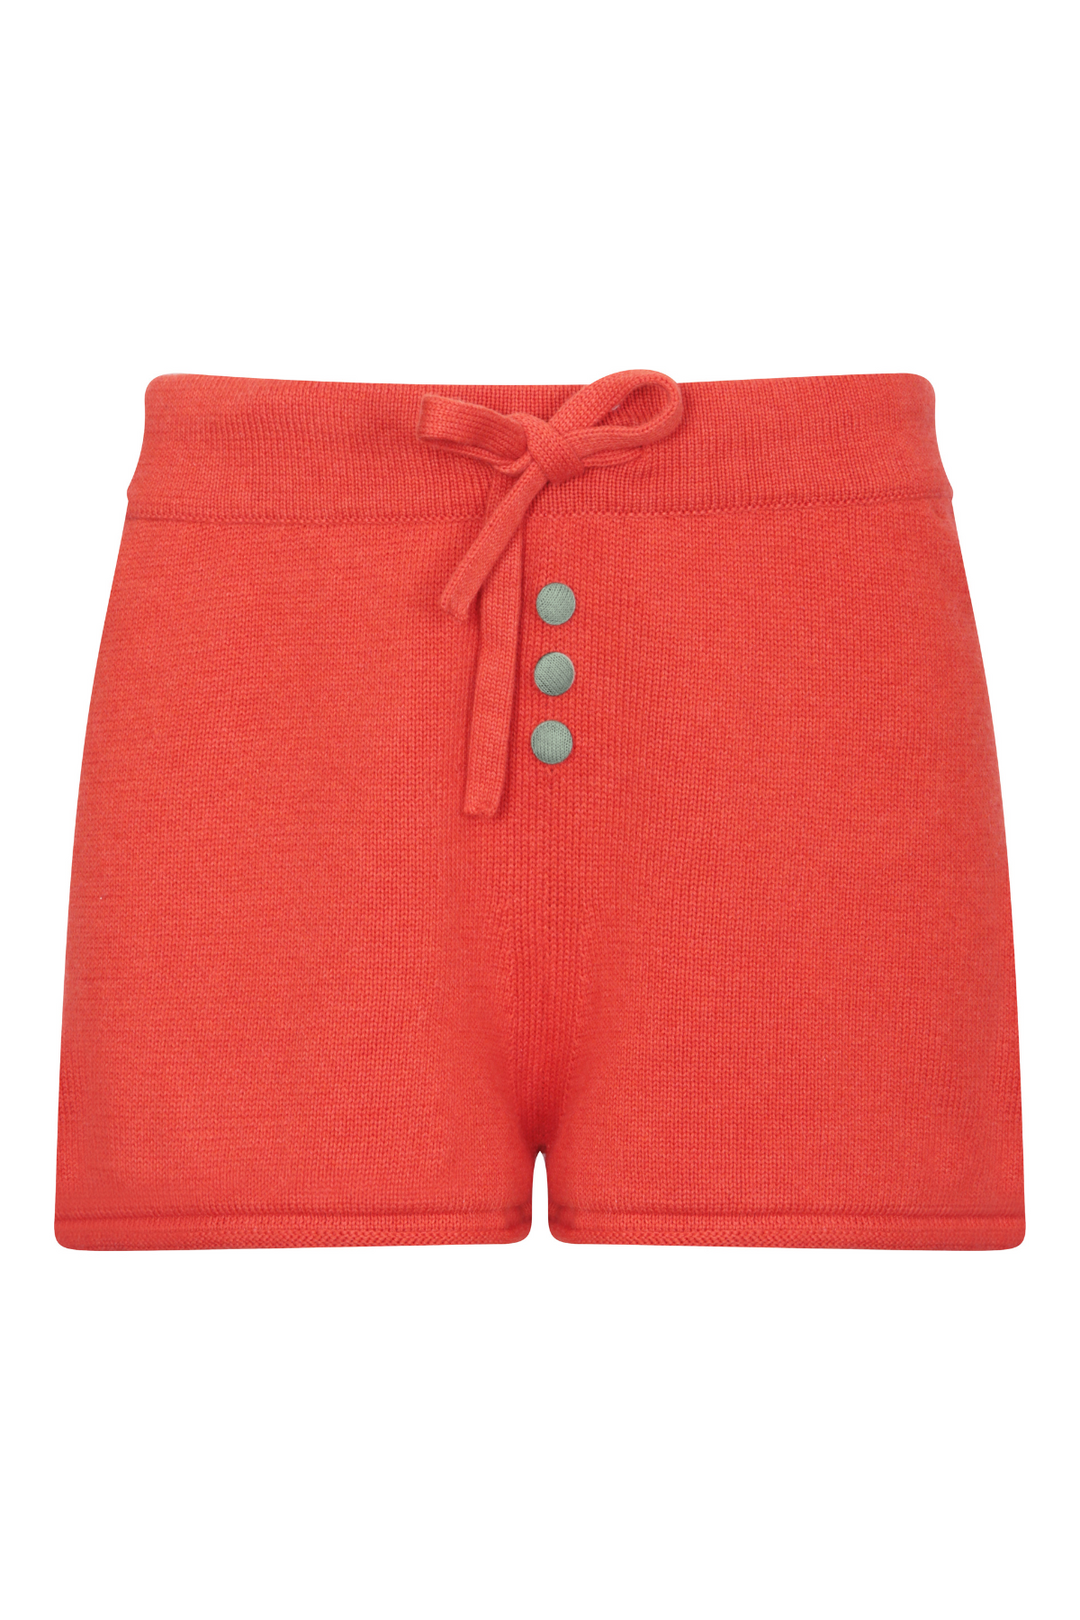 Burnt Orange Knitted Shorts - noemotions-store